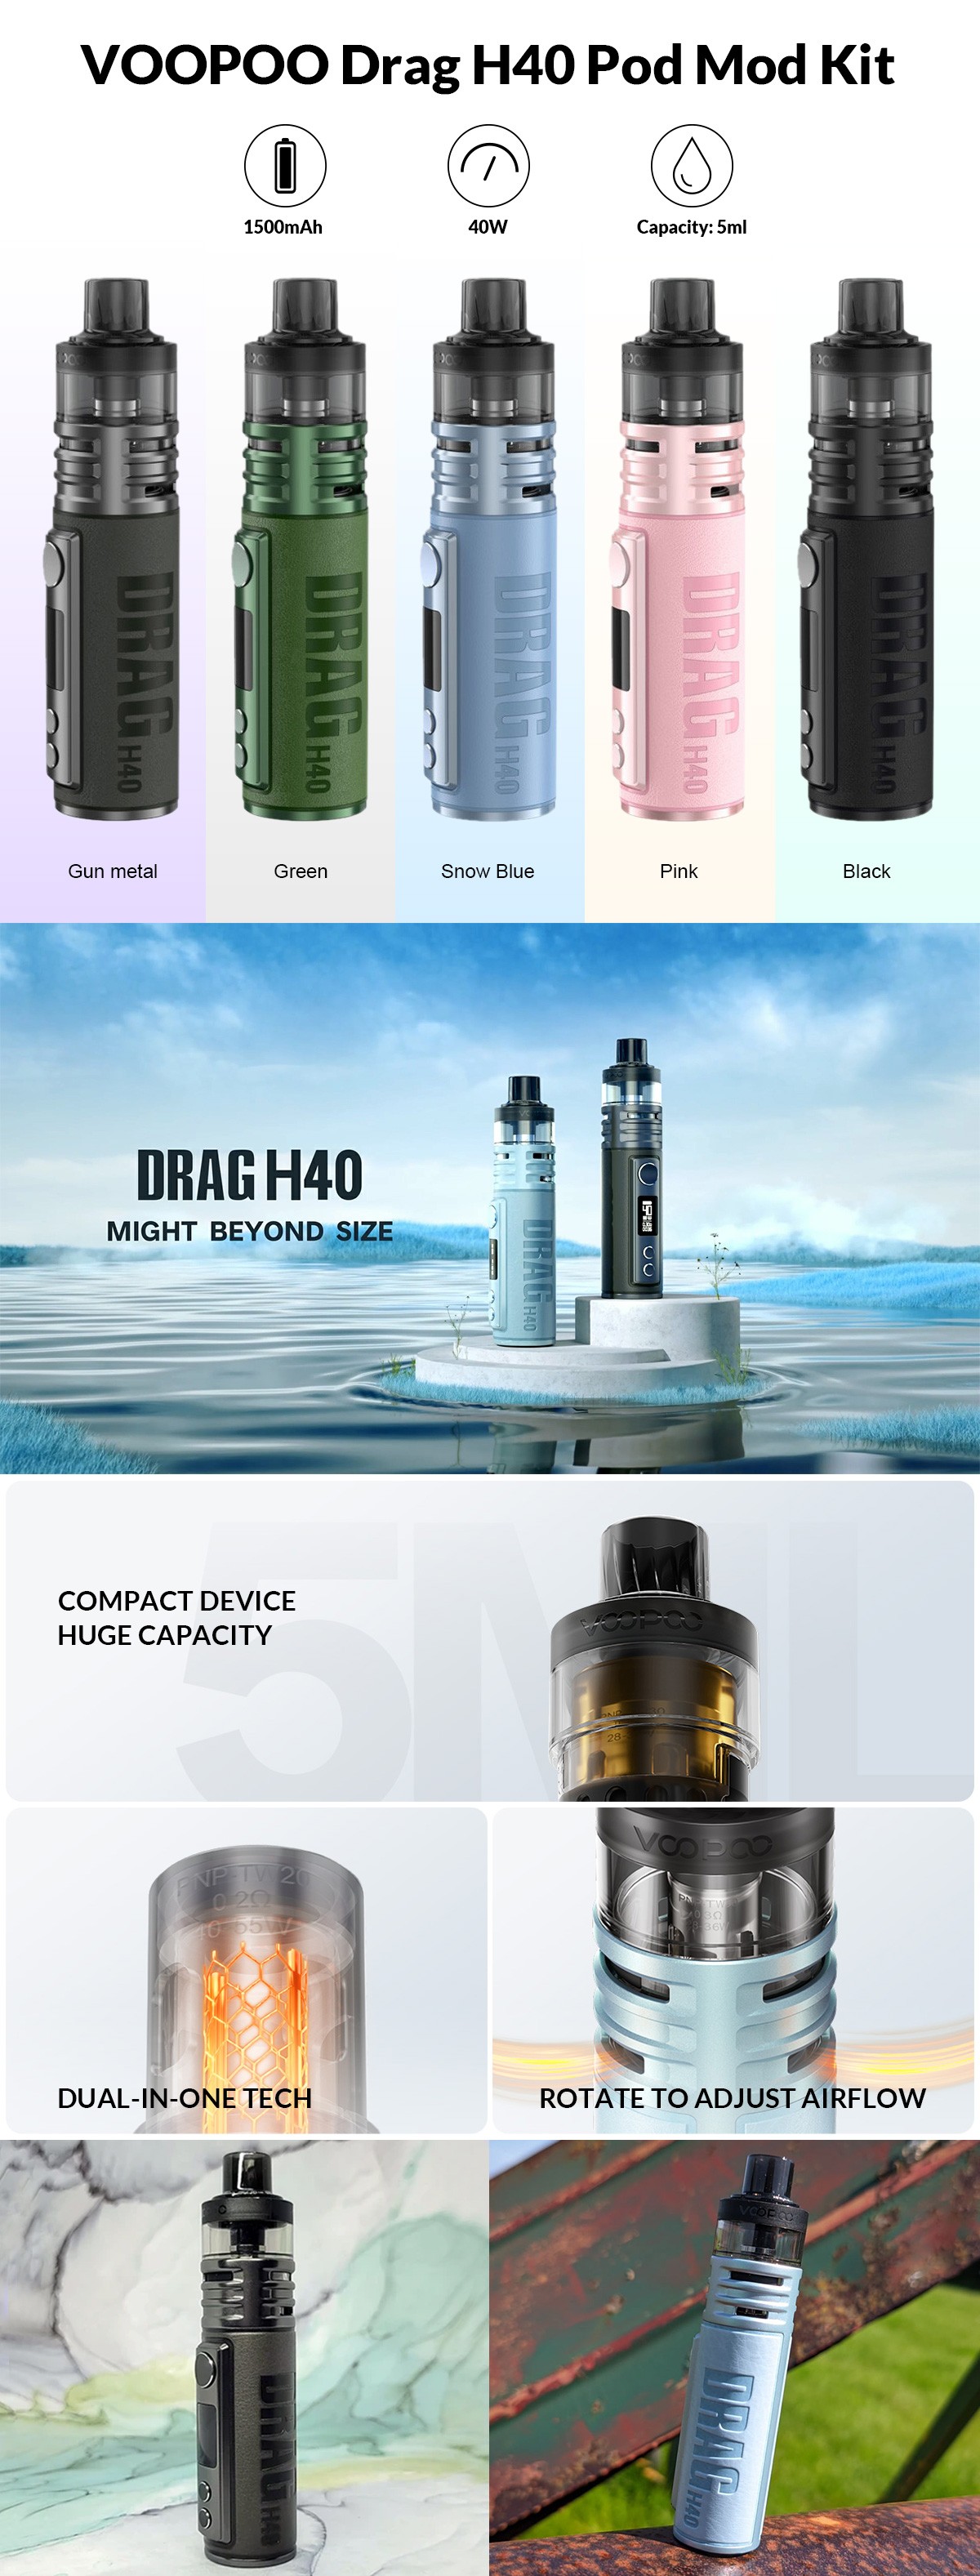 VOOPOO Drag H40 Kit Best Online